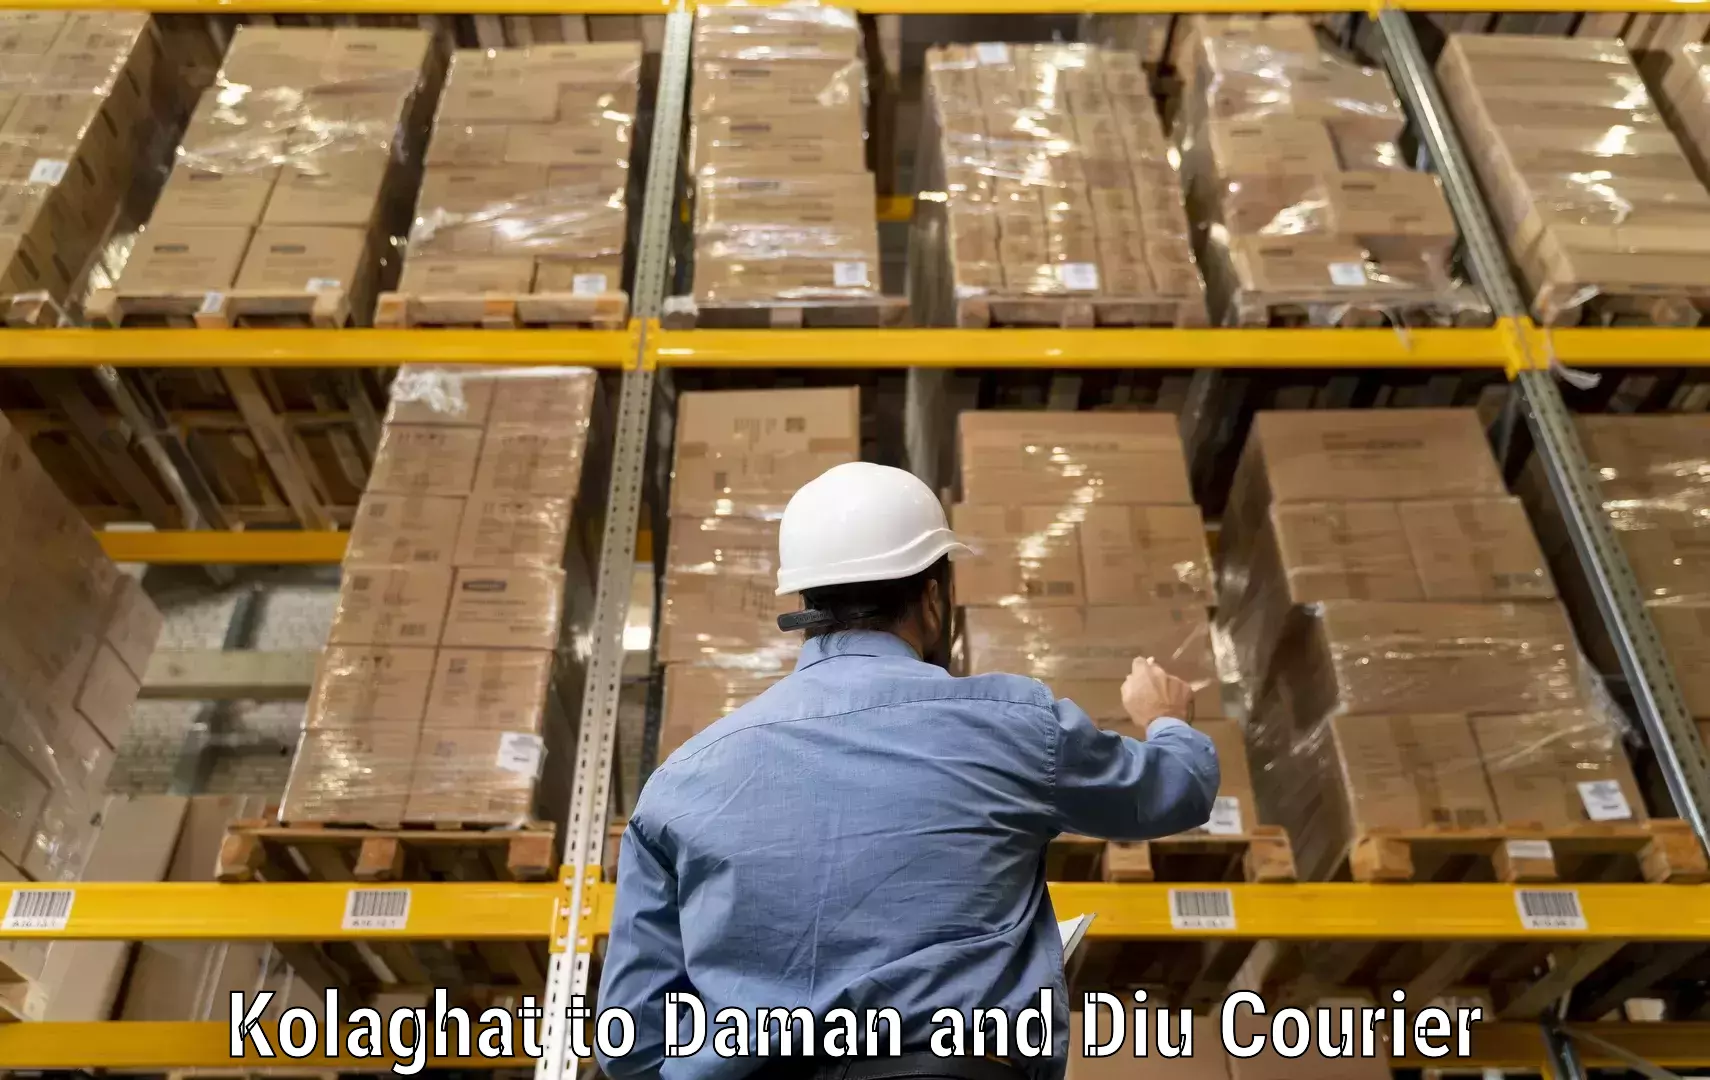 Professional courier handling Kolaghat to Daman